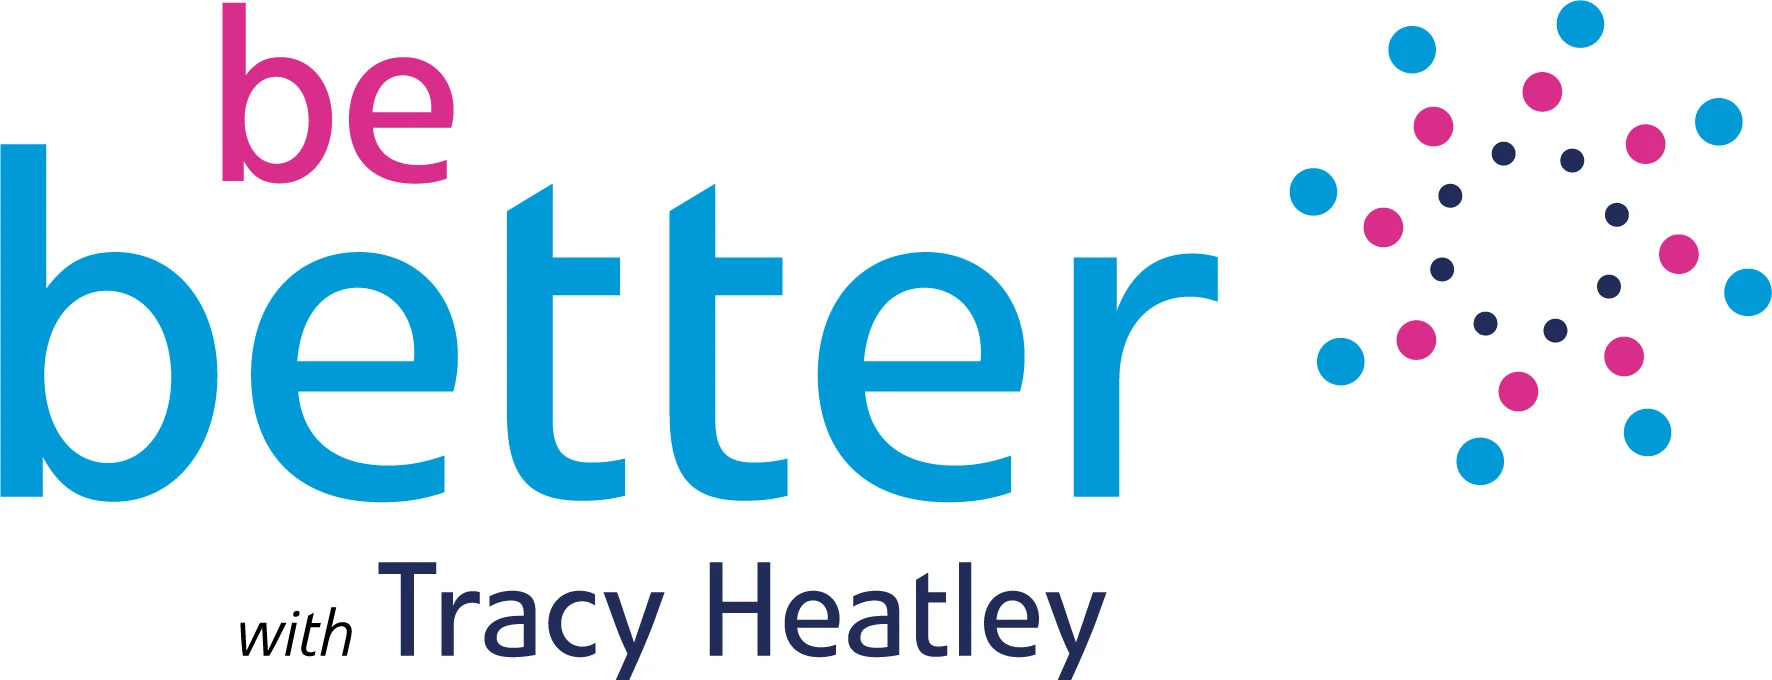 Tracy Heatley Limited Logo